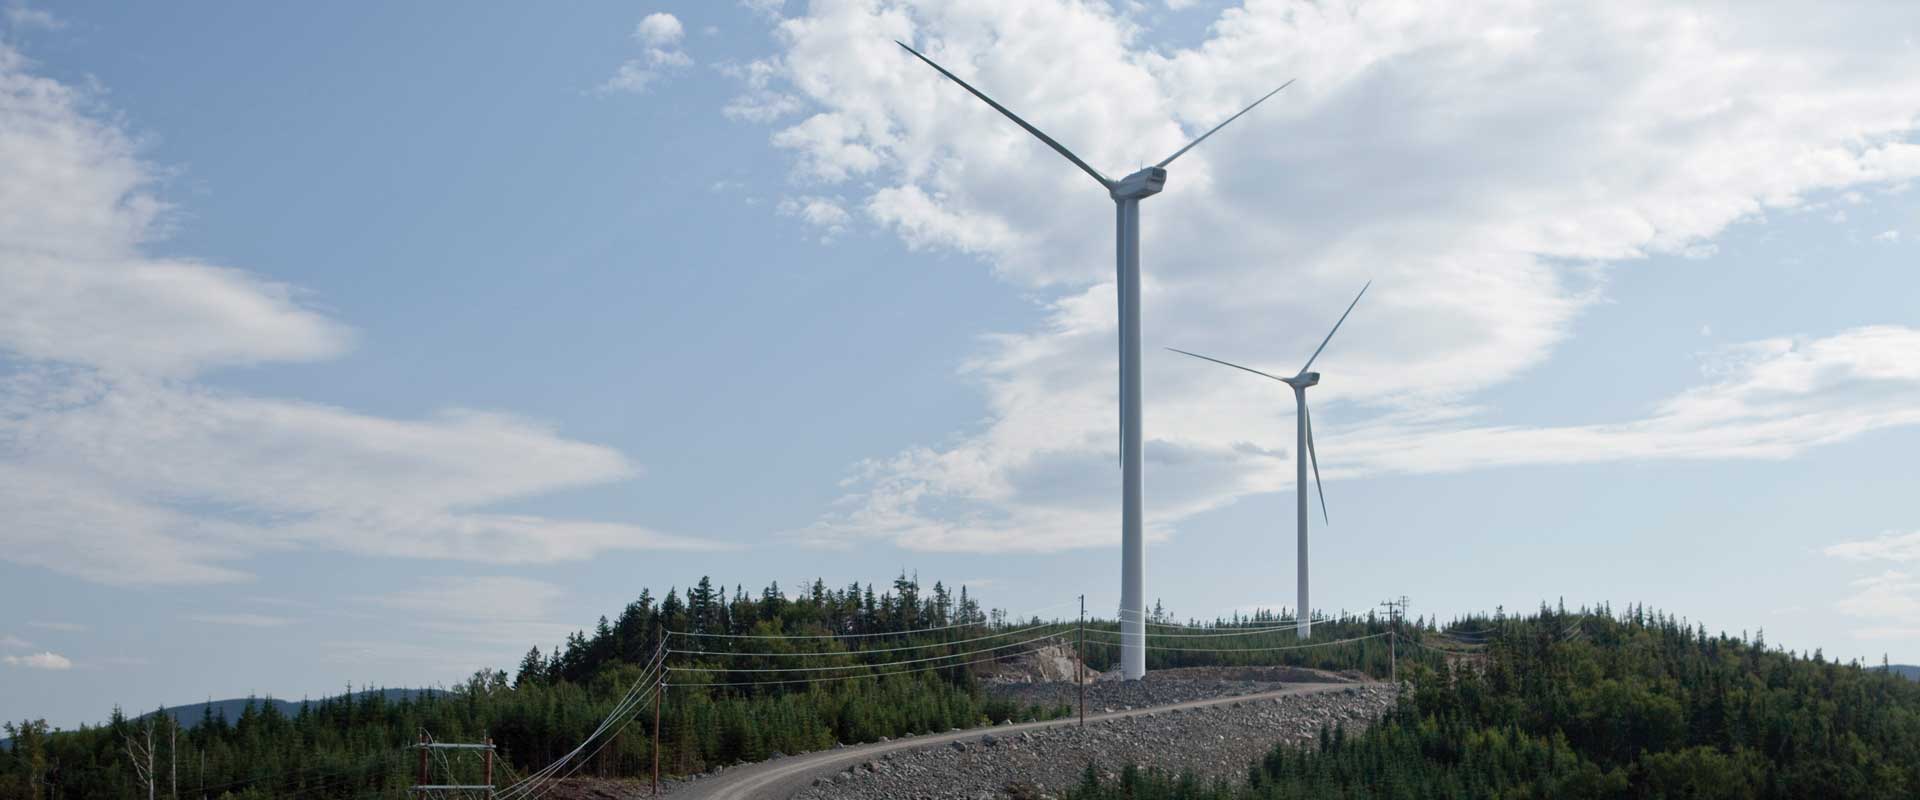 Kibby Wind Power Project - Energy